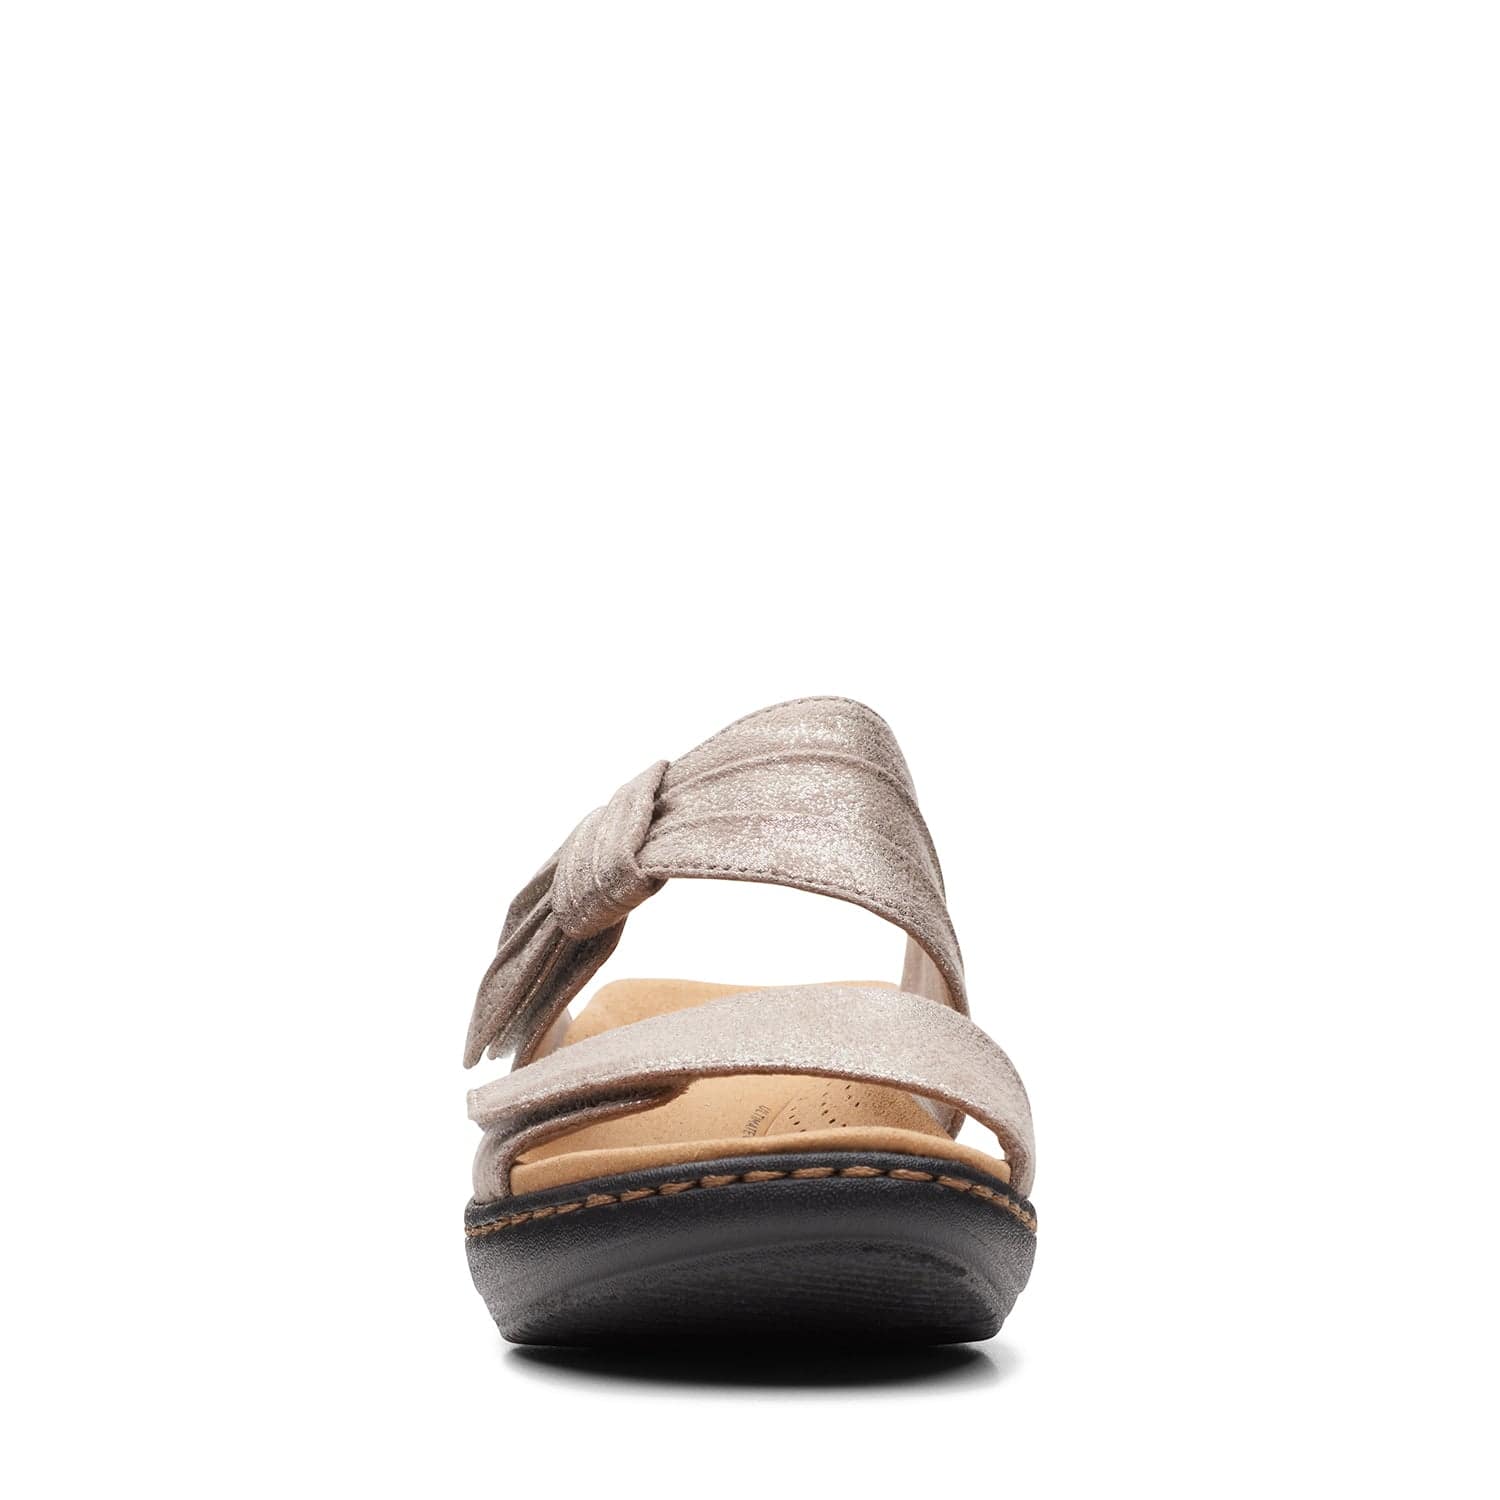 Clarks Merliah Charm Sandals - Taupe Metallic - 261649554 - D Width (Standard Fit)